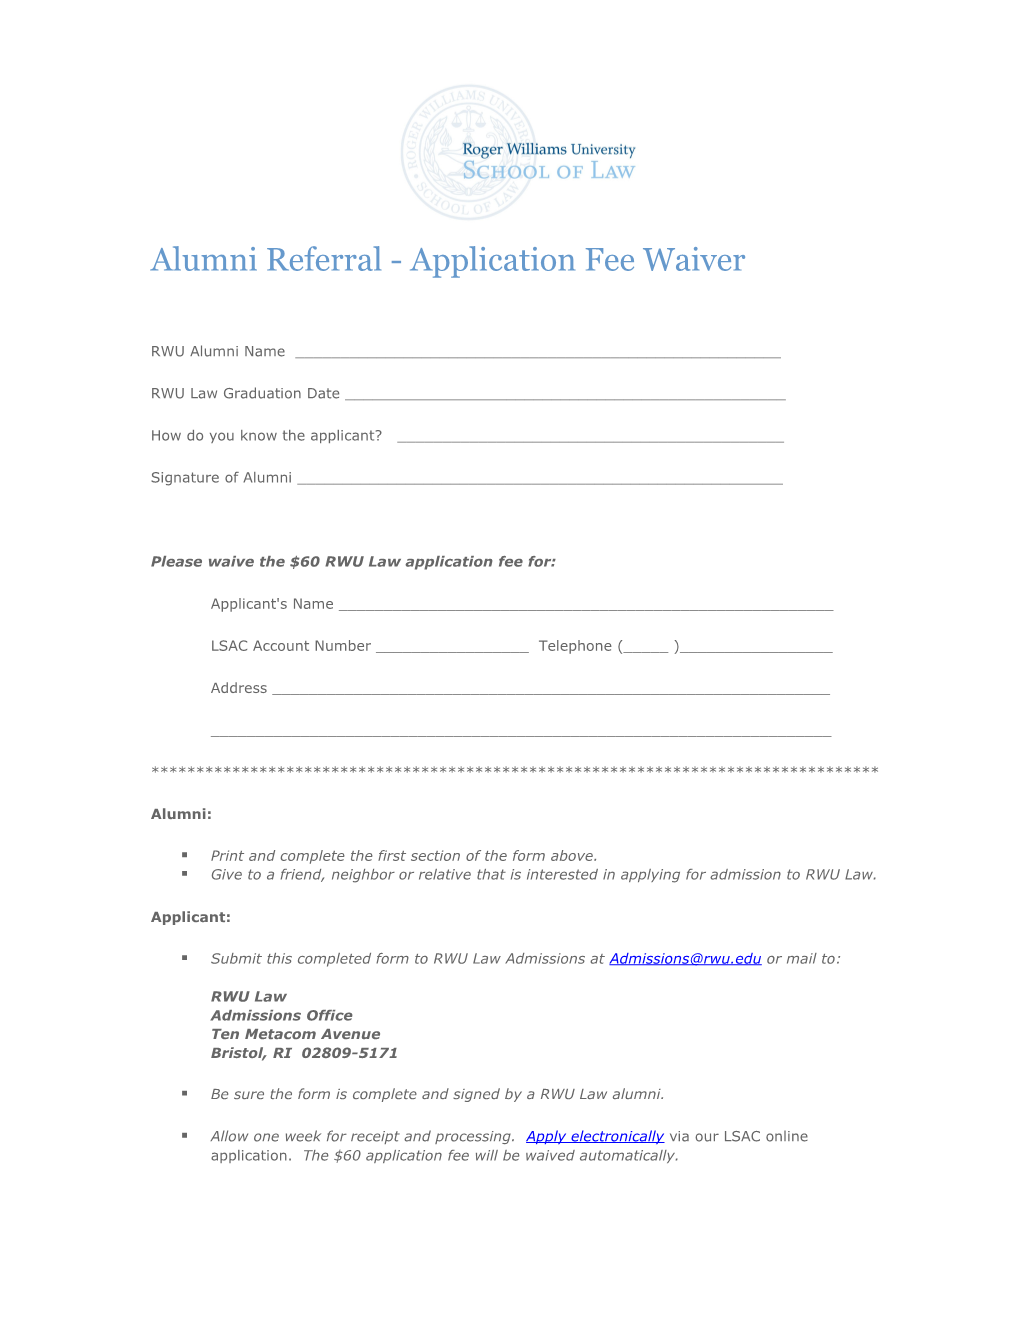 Alumni Referral - Application Fee Waiver